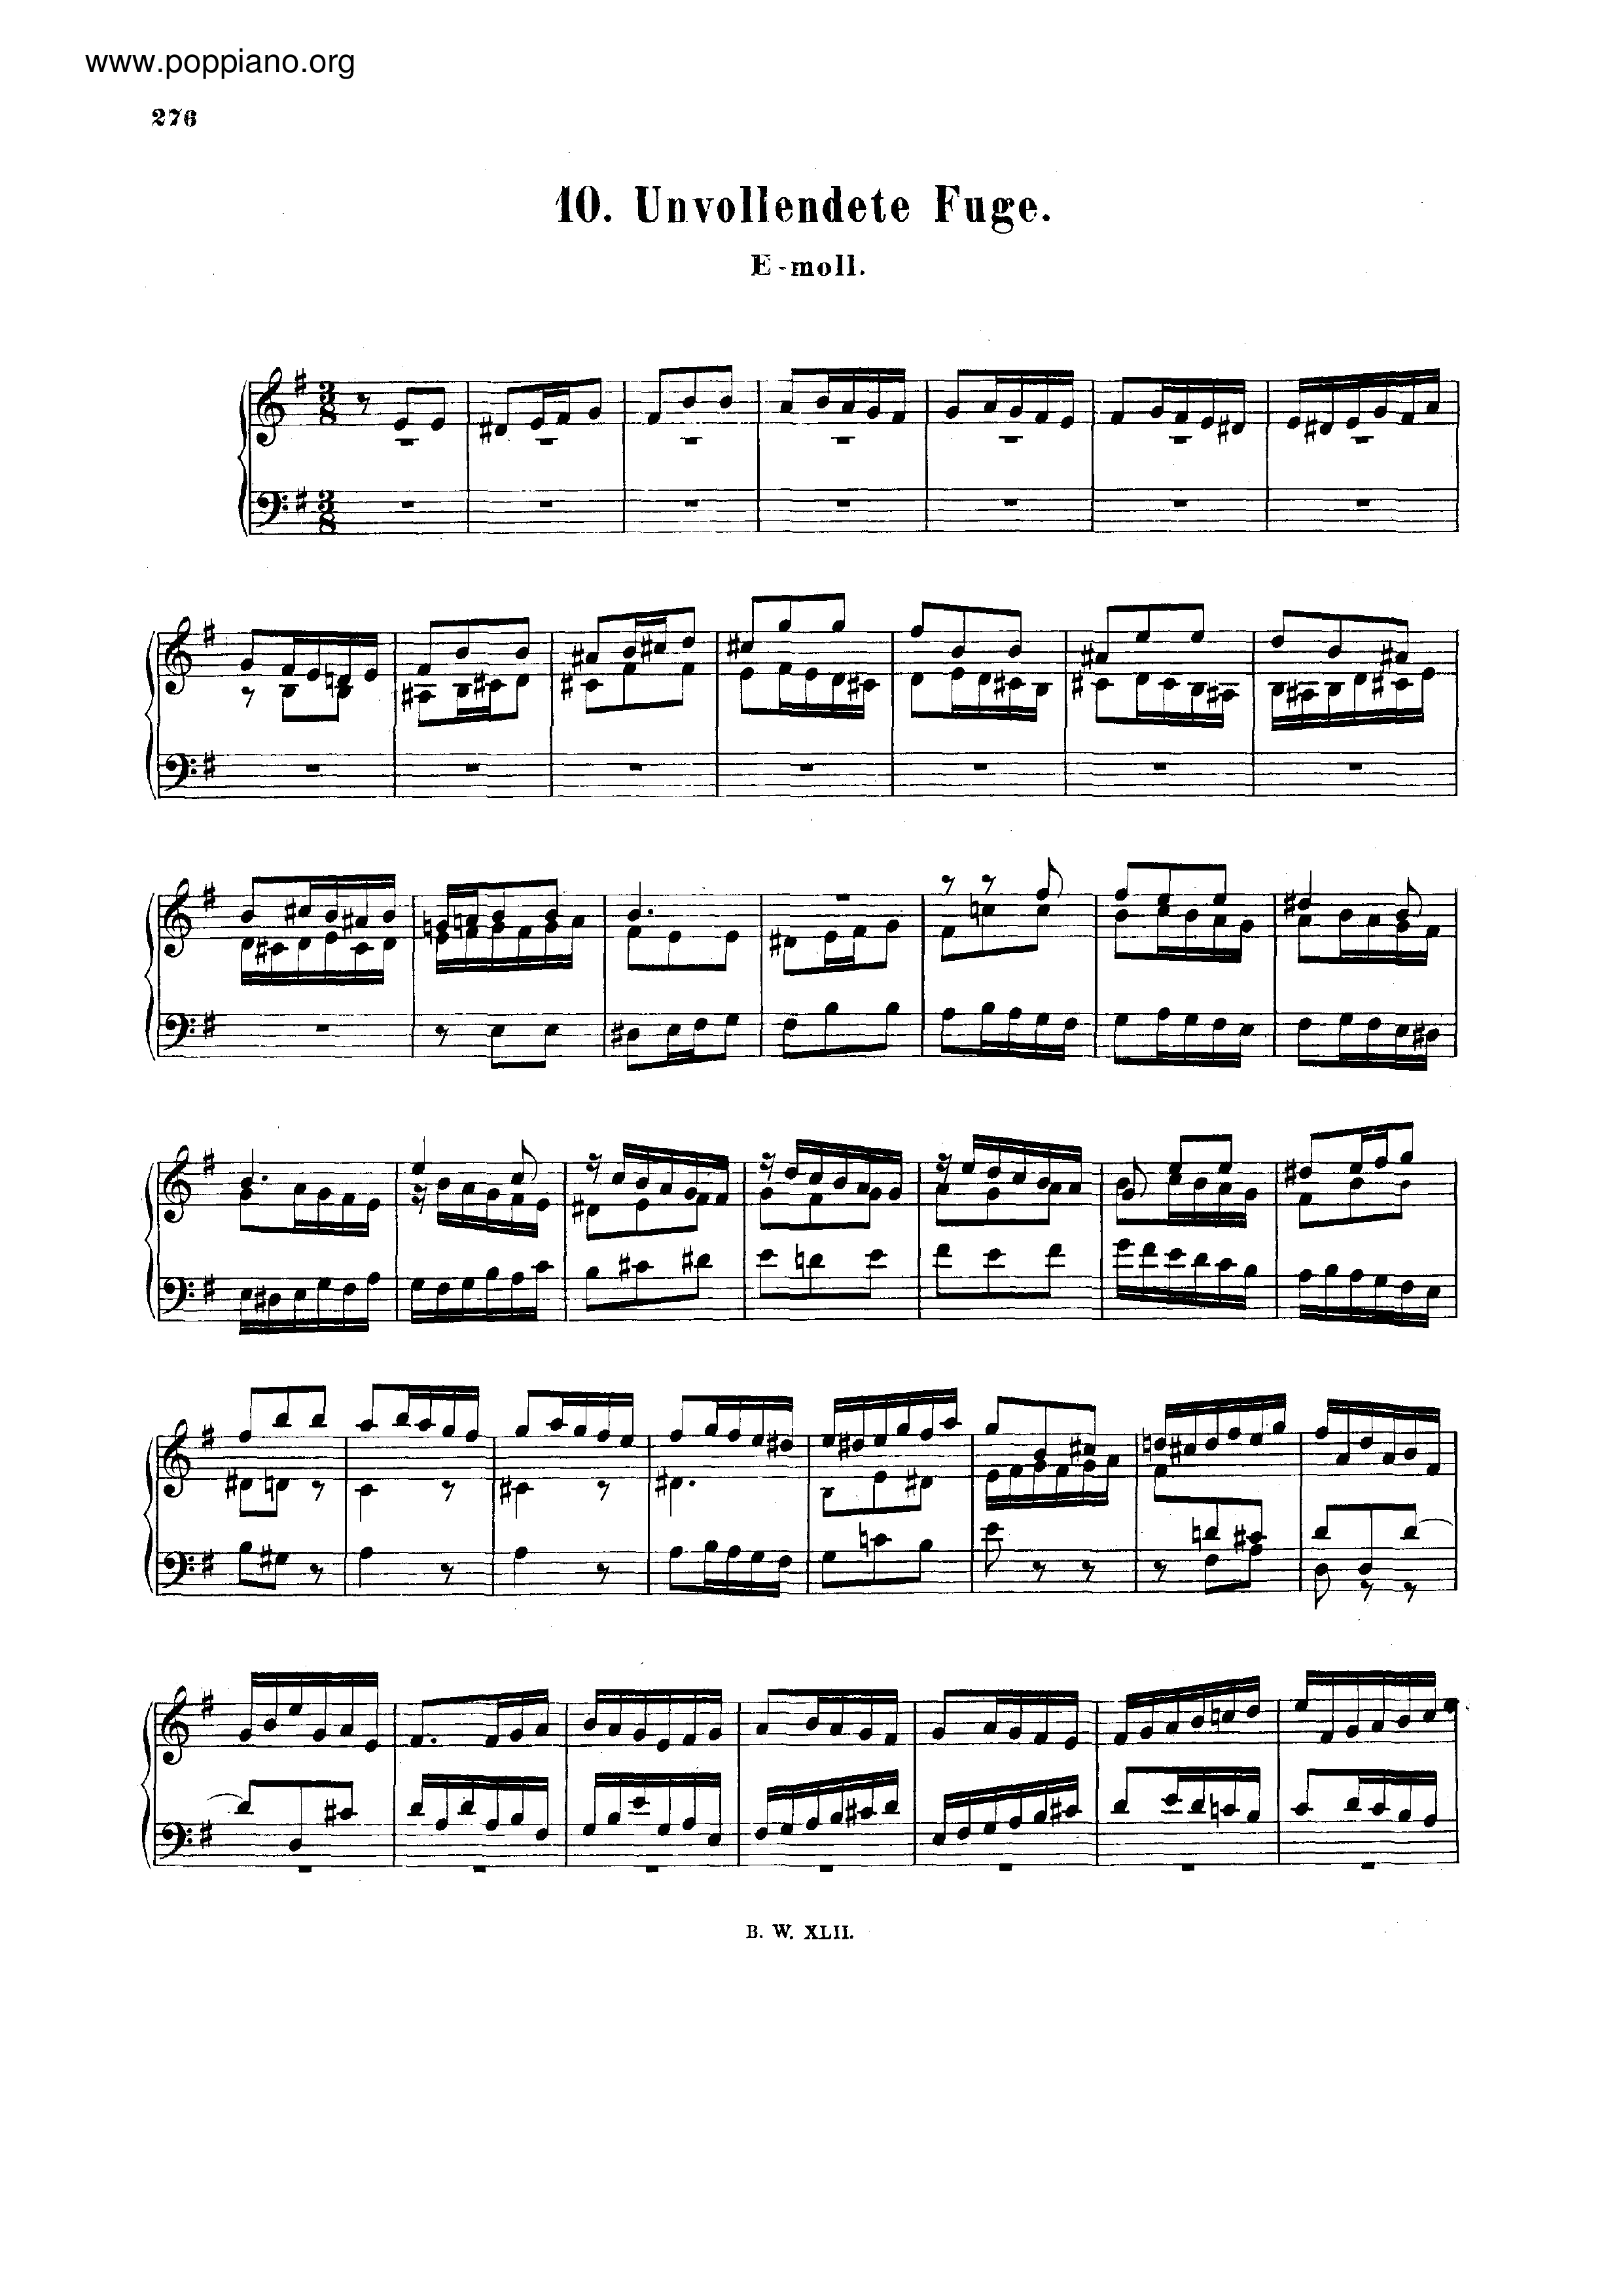 Fugue in e minor, BWV 960 (unfinished)琴谱